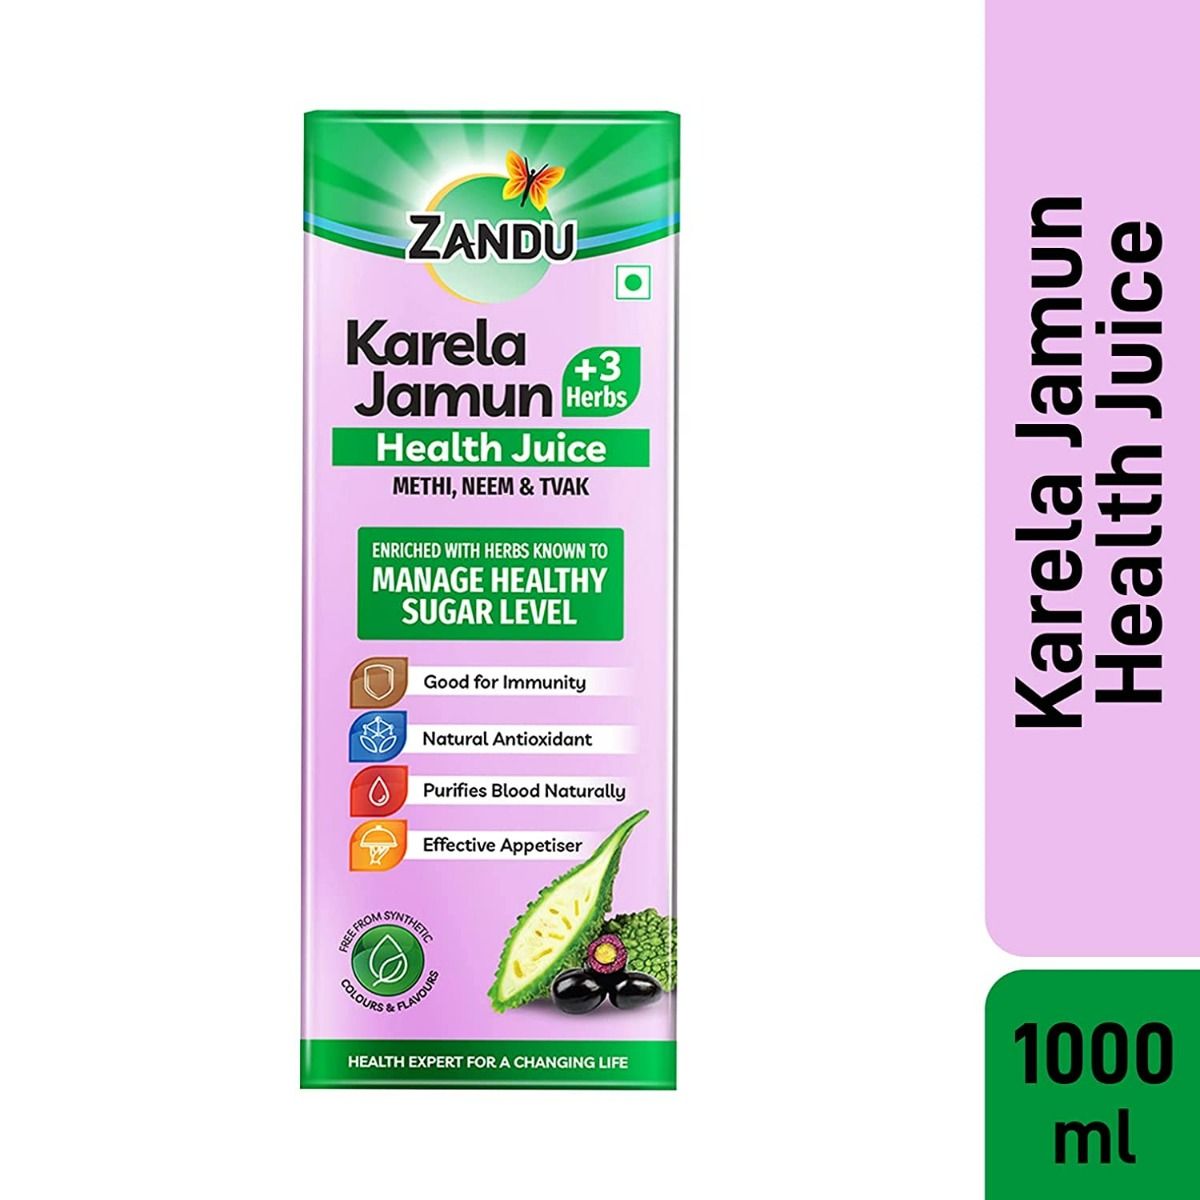 Buy Zandu Karela Jamun +3 Herbs Health Juice, 1000 ml Online